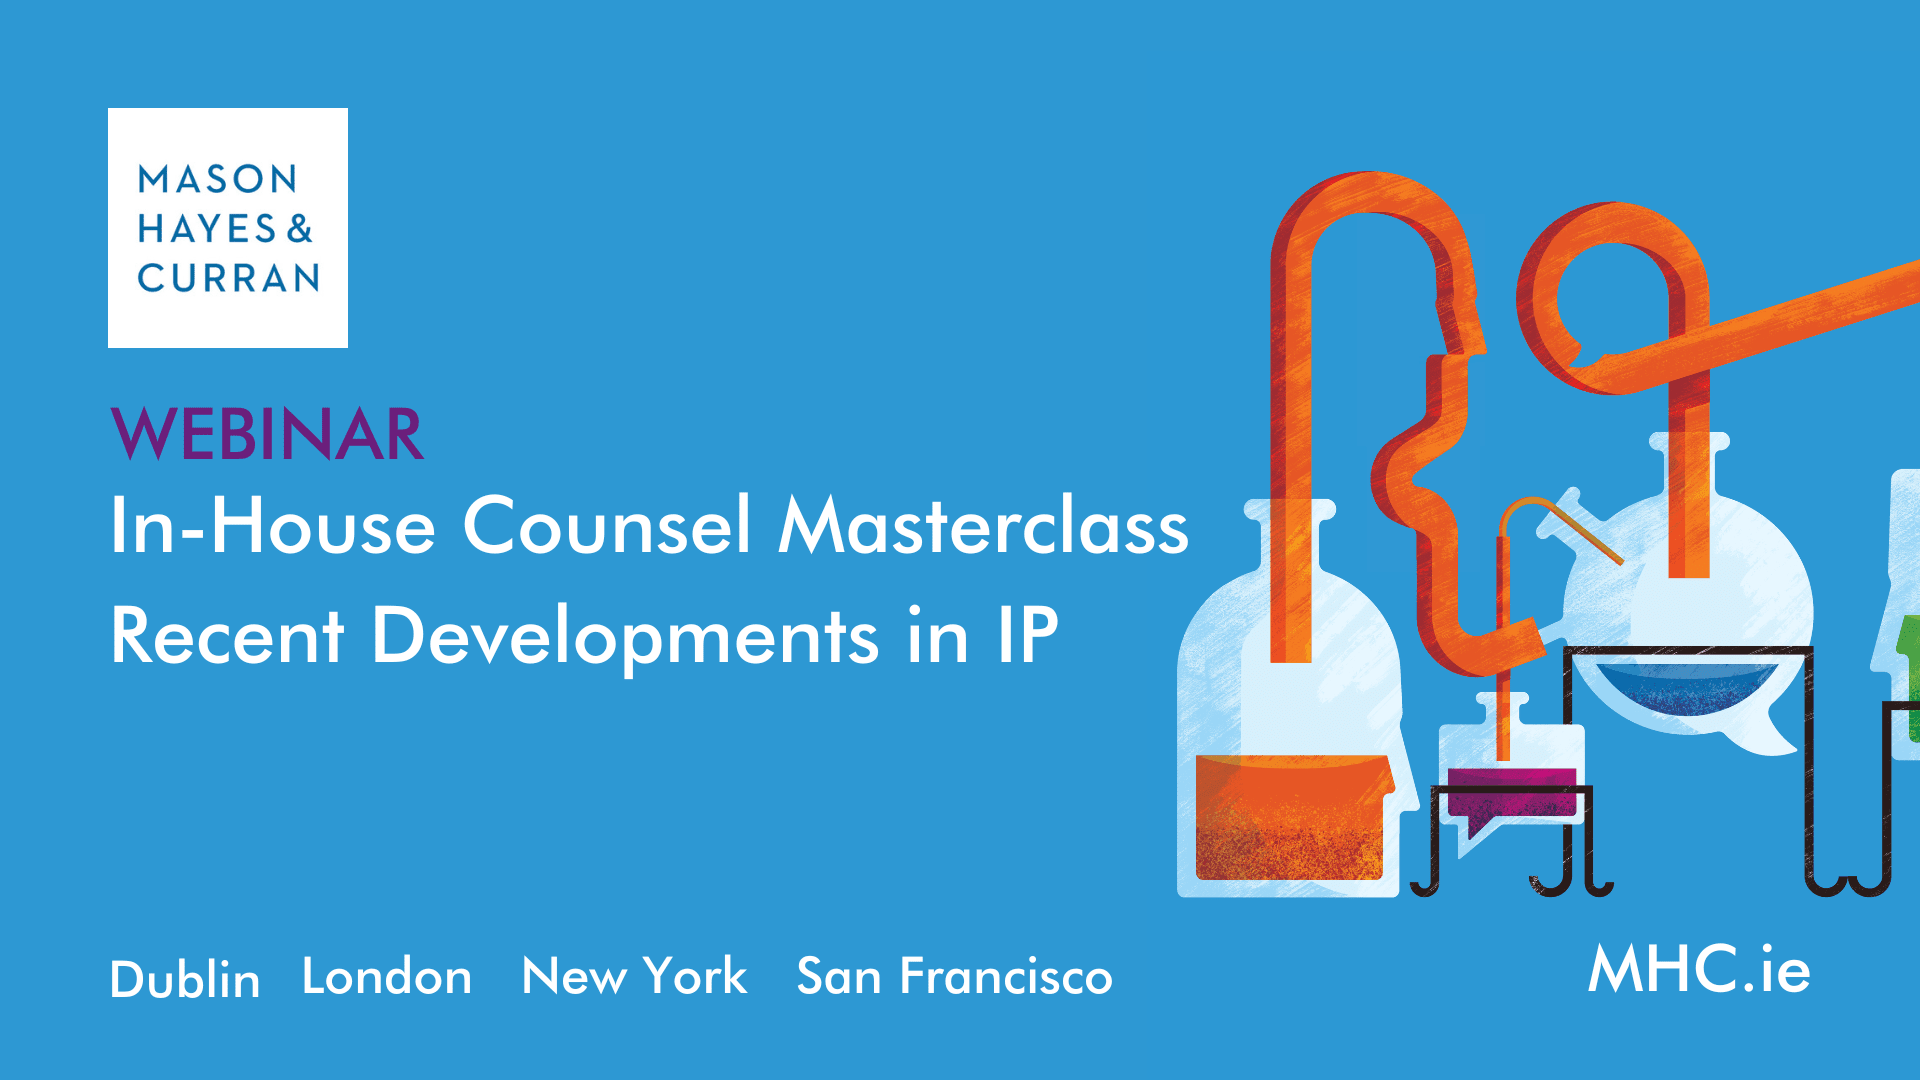 Webinar: In-House Counsel Masterclass - Recent Developments in IP